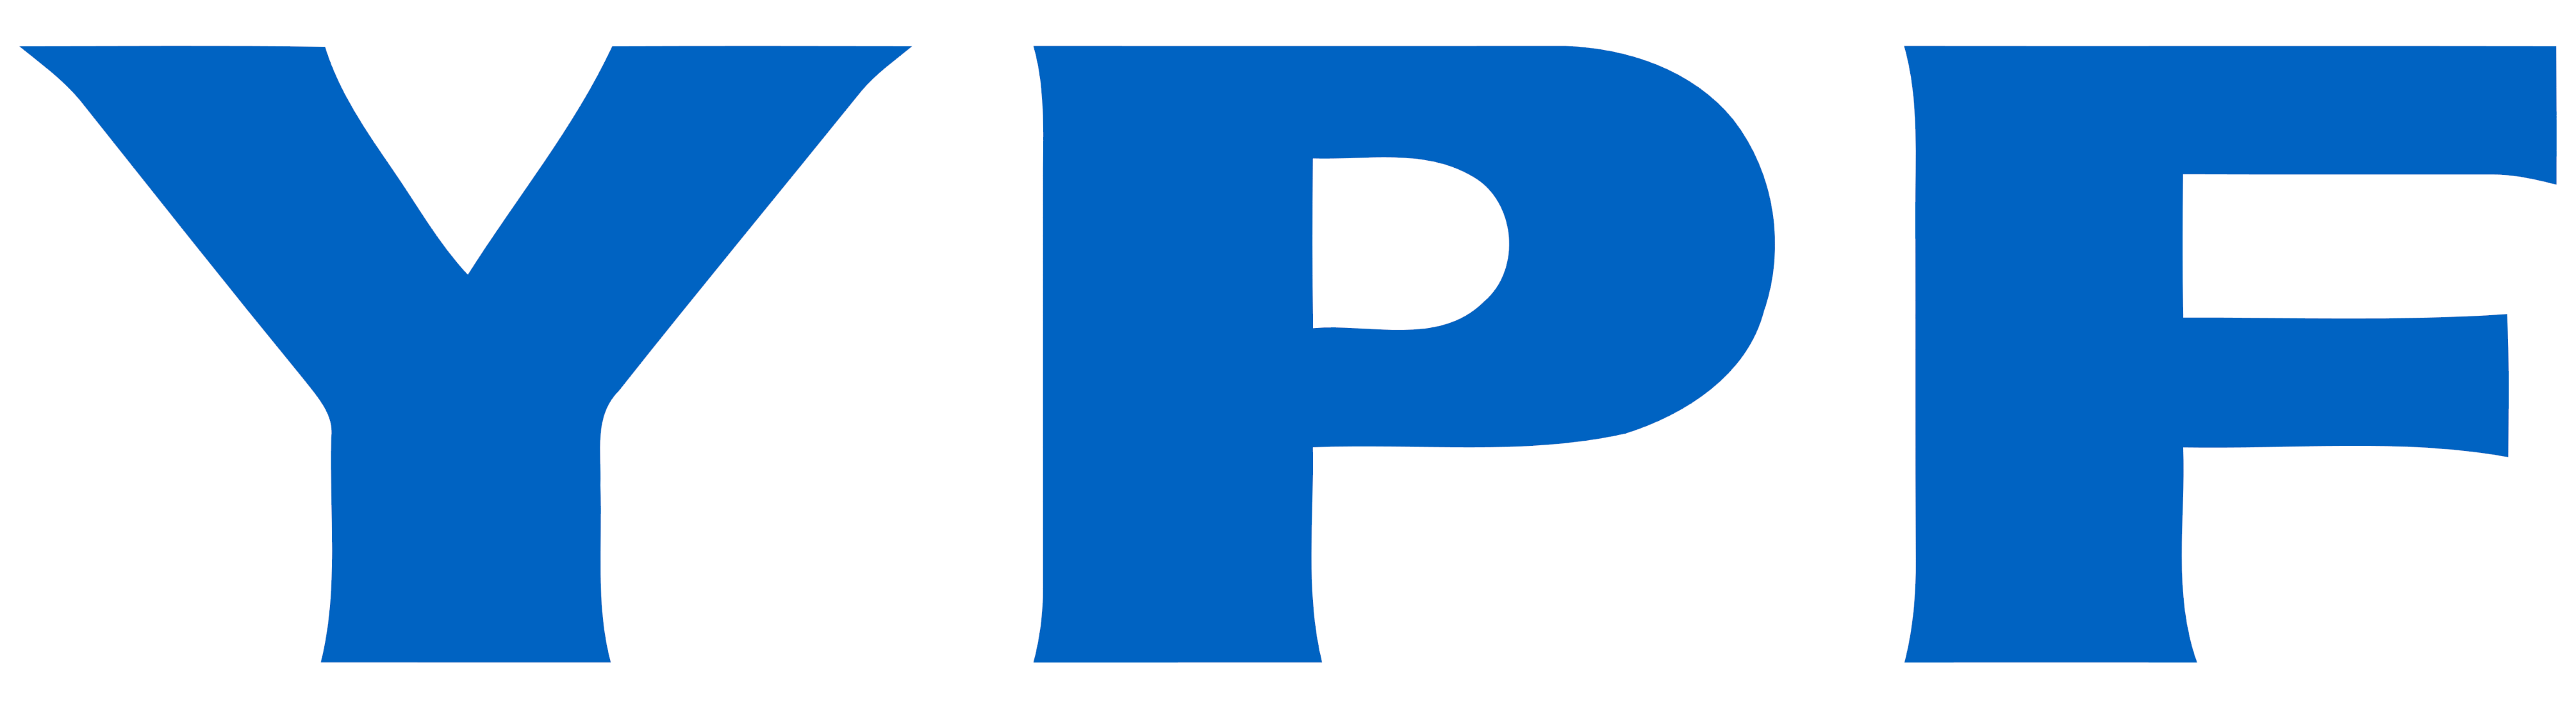 YPF Logo - YPF – Logos, brands and logotypes